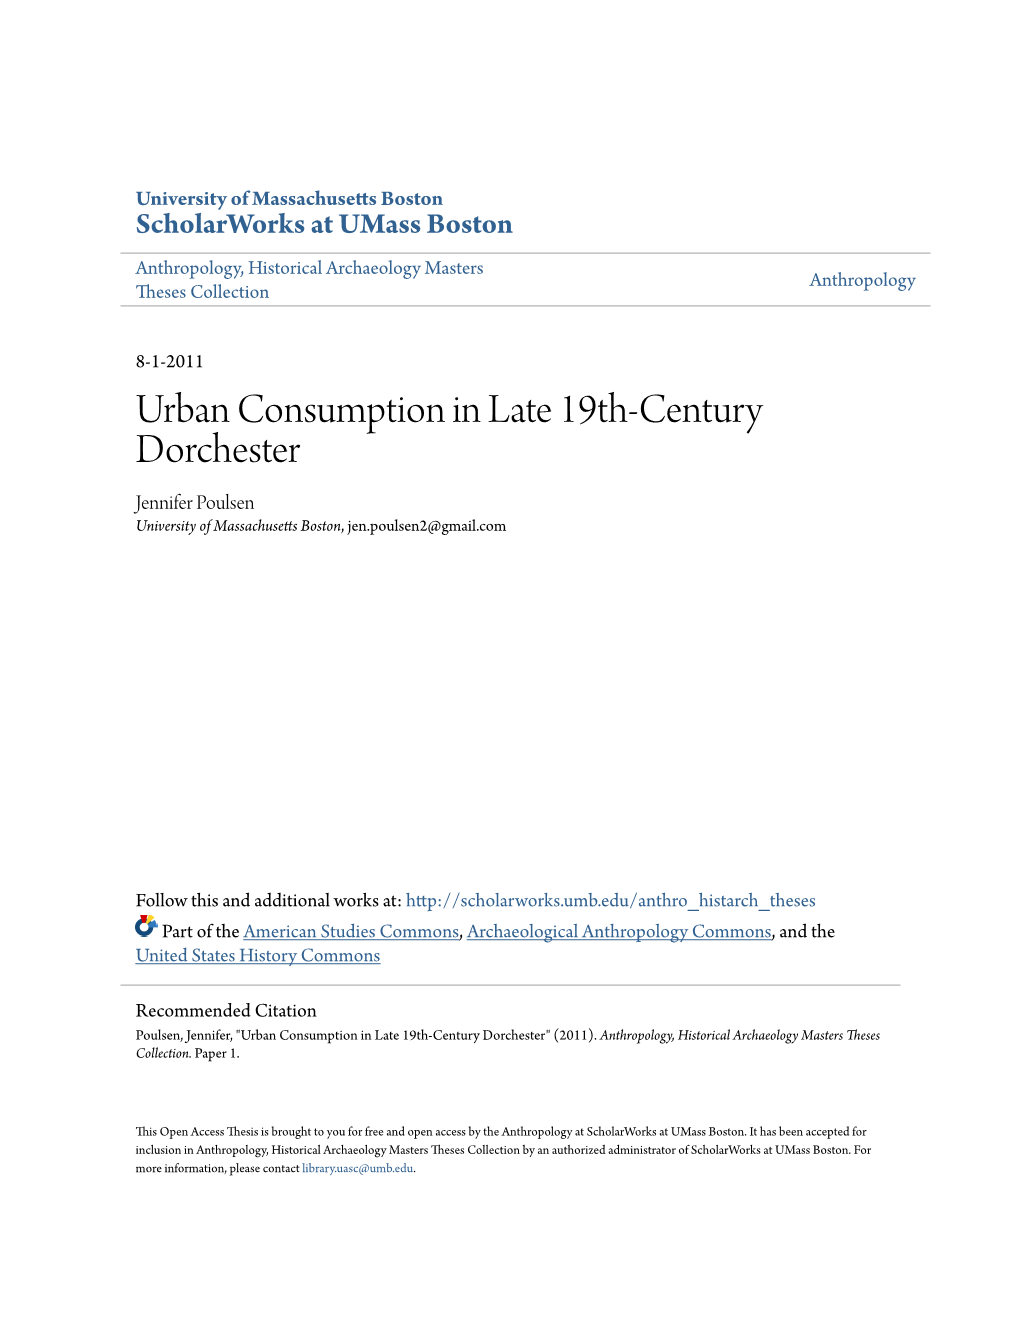 Urban Consumption in Late 19Th-Century Dorchester Jennifer Poulsen University of Massachusetts Boston, Jen.Poulsen2@Gmail.Com